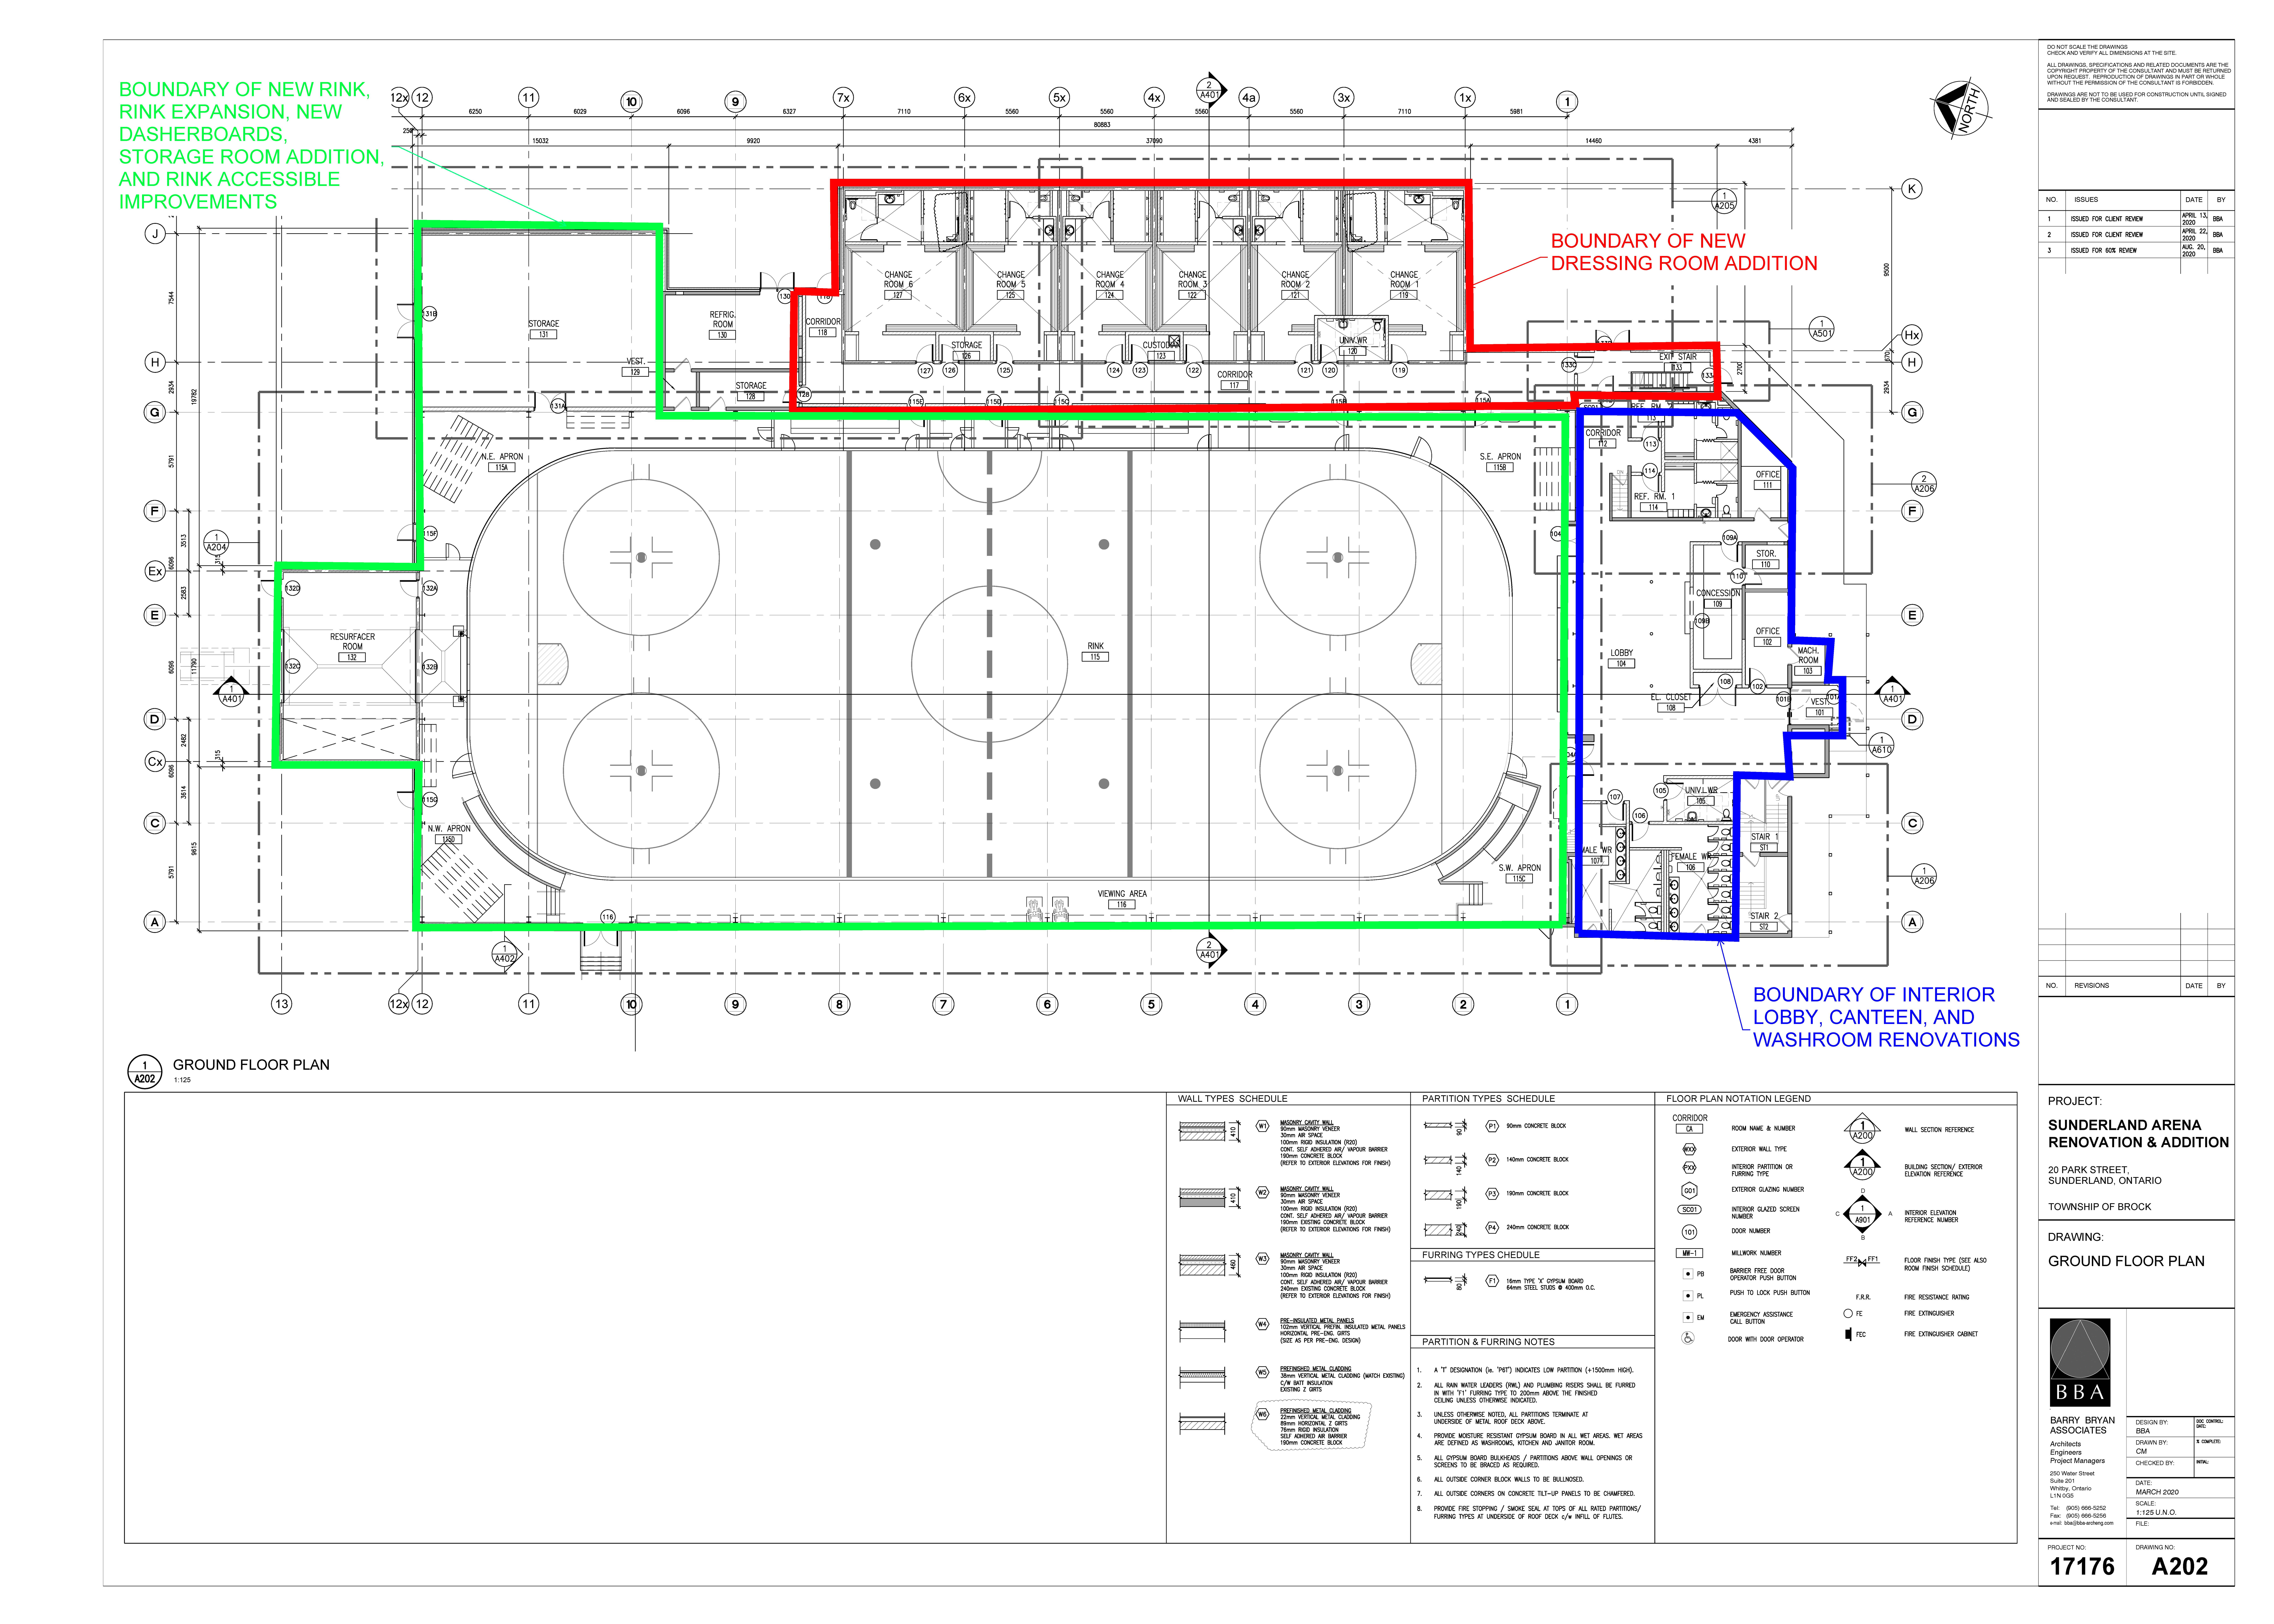 Sunderland Arena 2019 site plan drawings